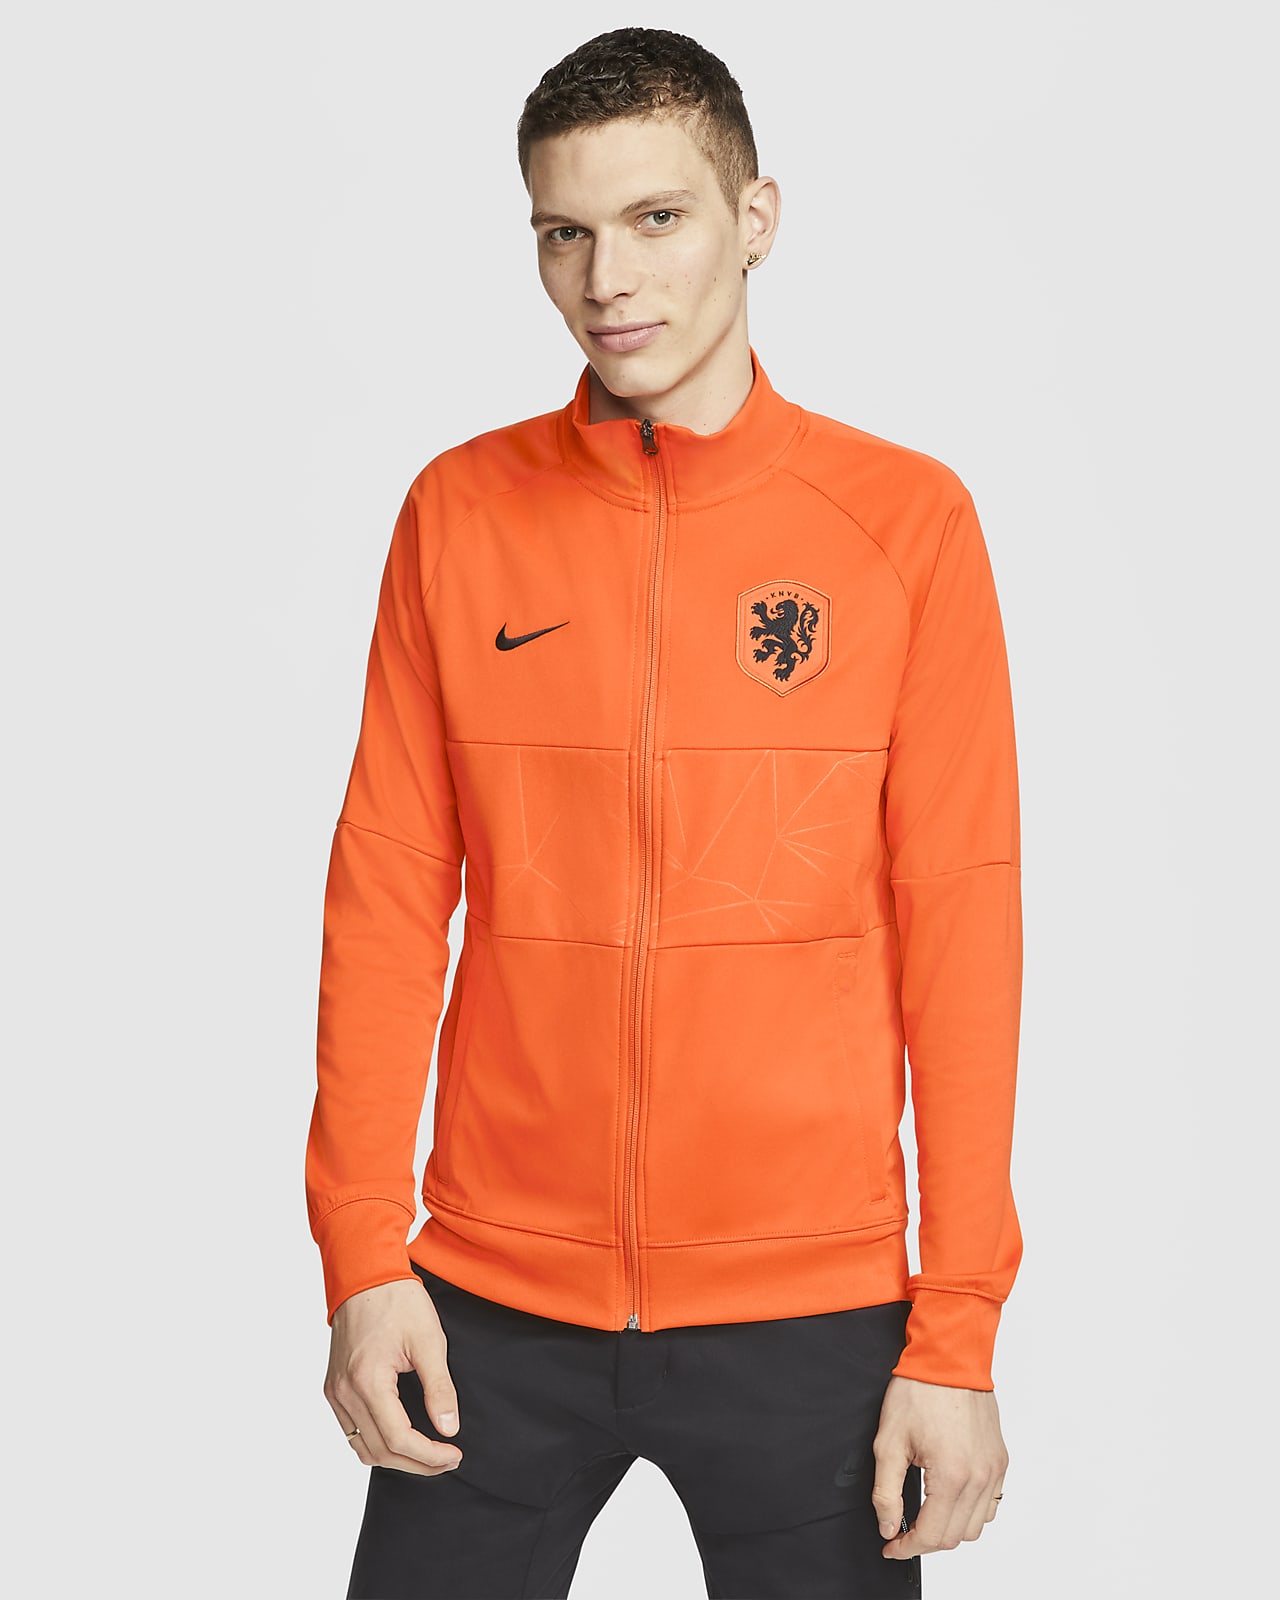 Netherlands Men's Football Jacket. Nike LU